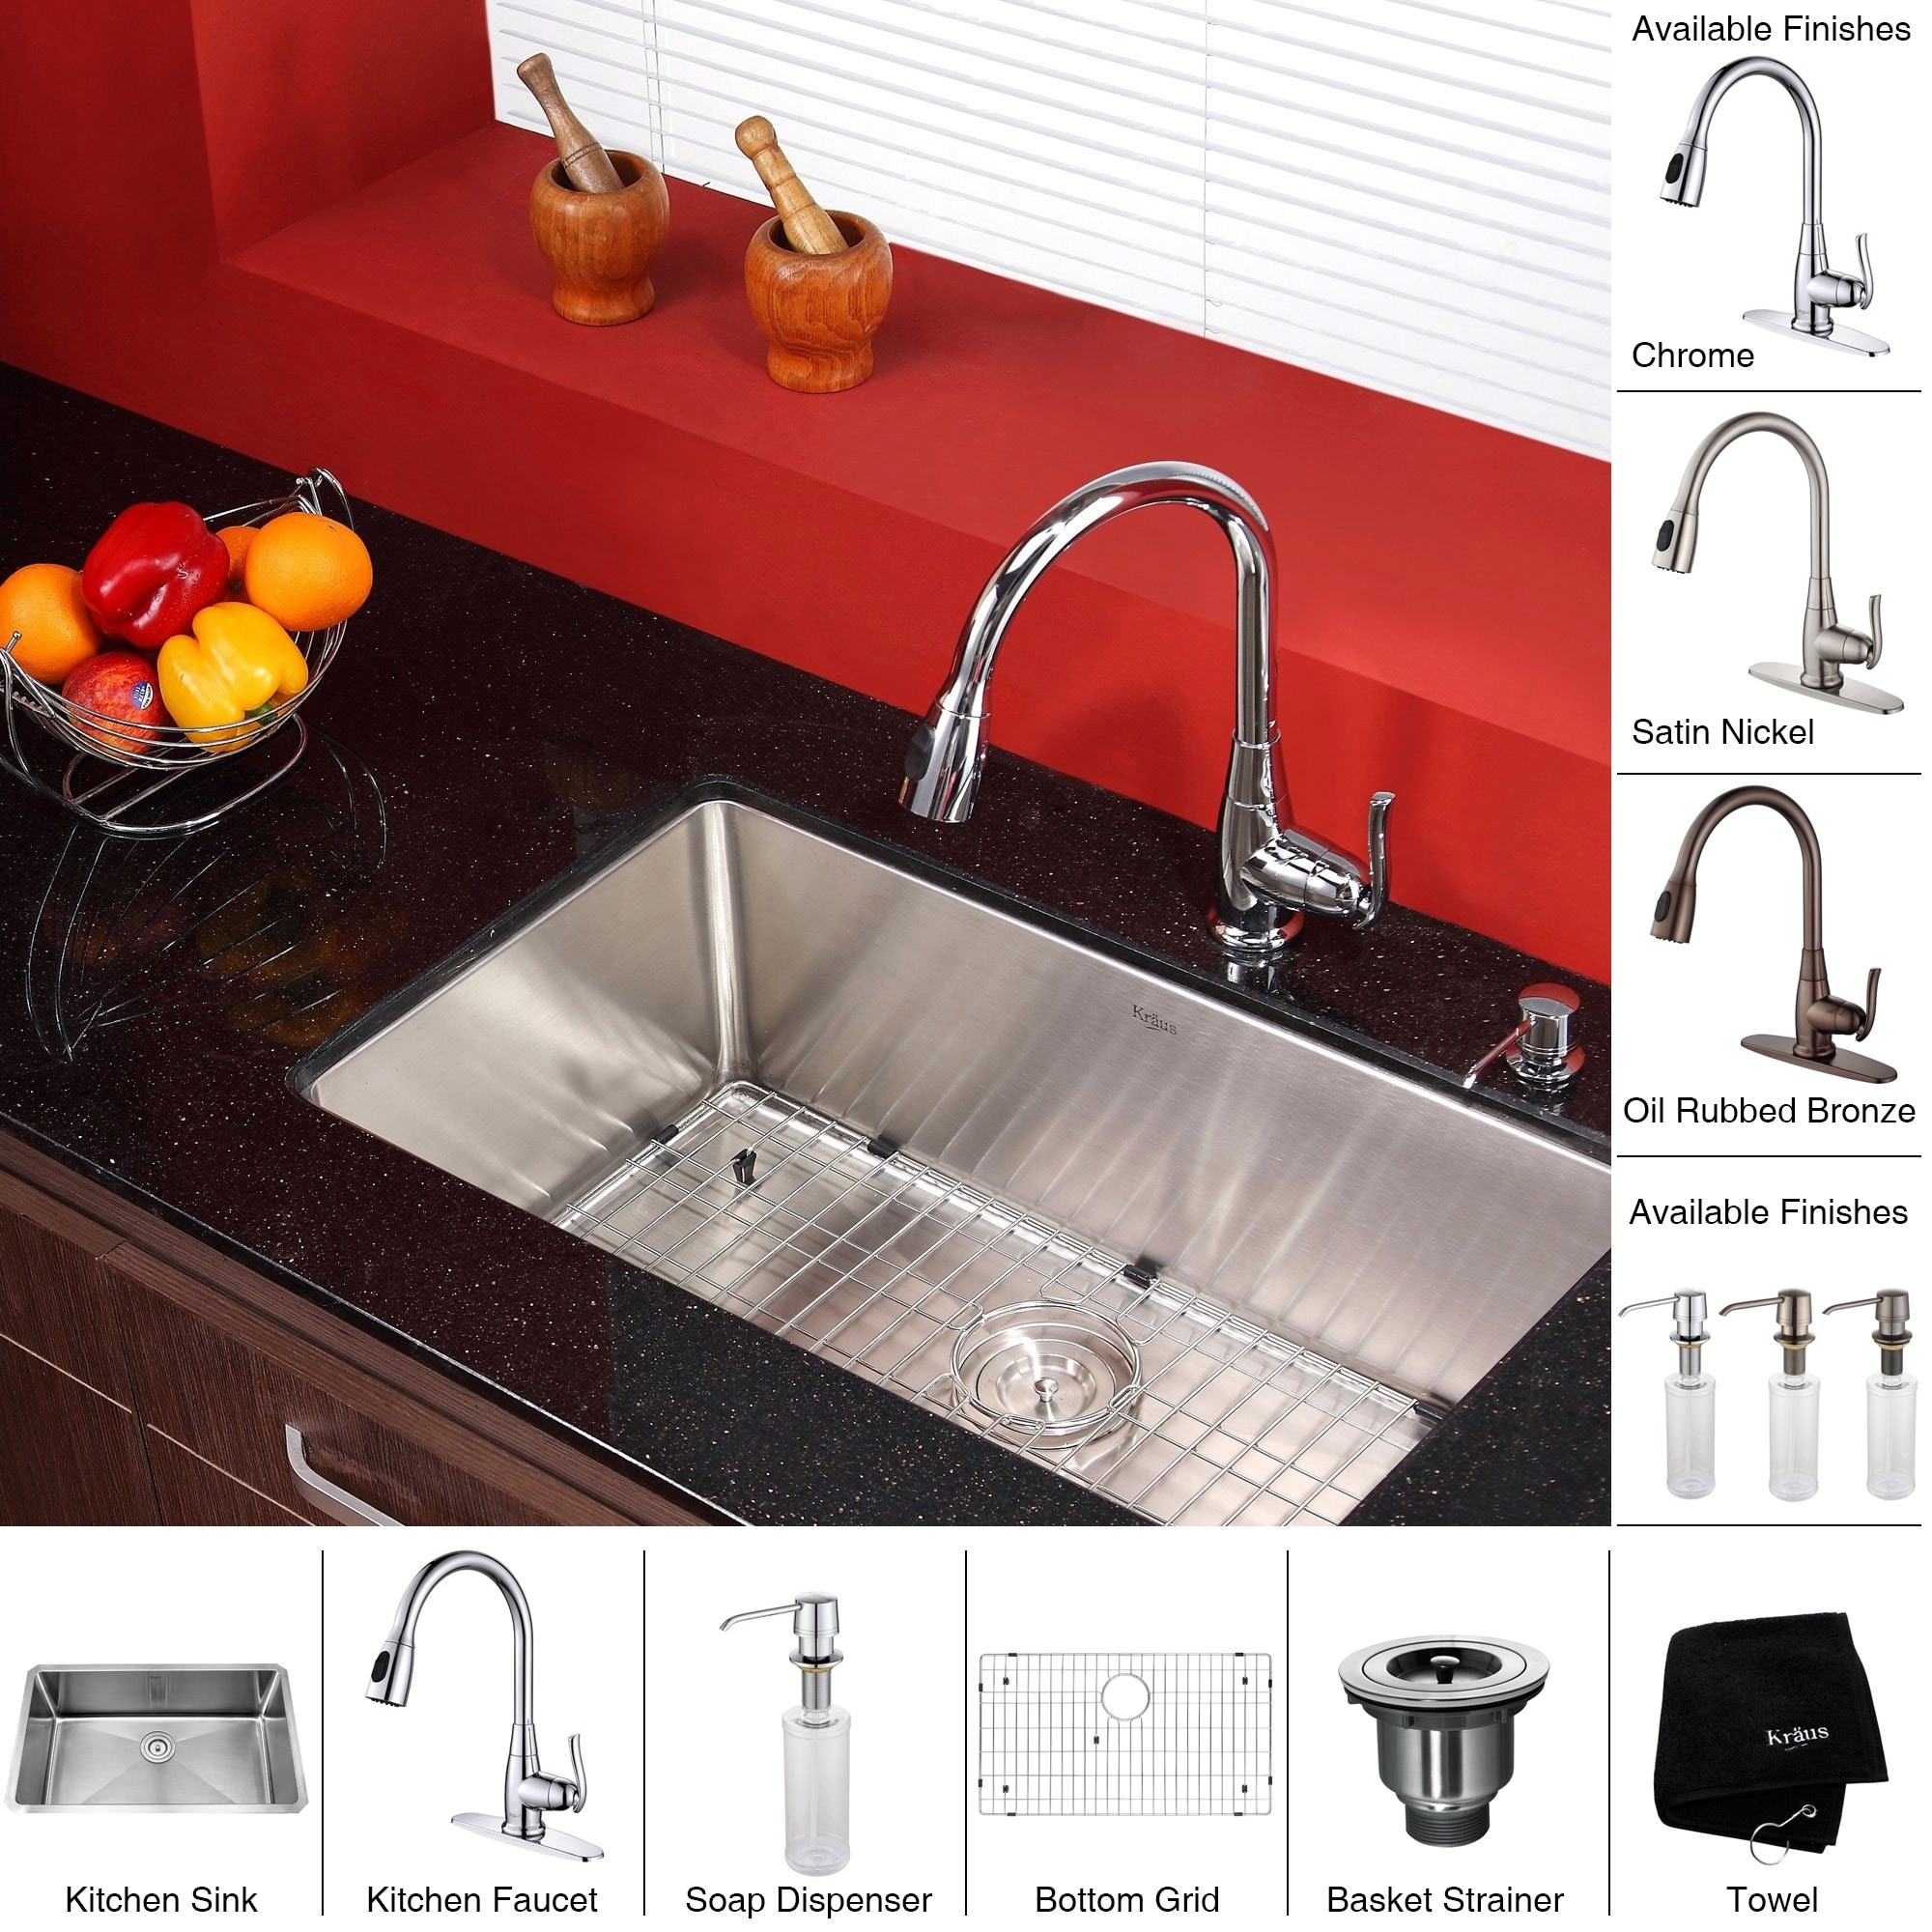 Kraus 30 Inch Undermount Single Bowl Stainless Steel Kitchen Sink Kpf 2230 Pull Down Kitchen Faucet Soap Dispenser